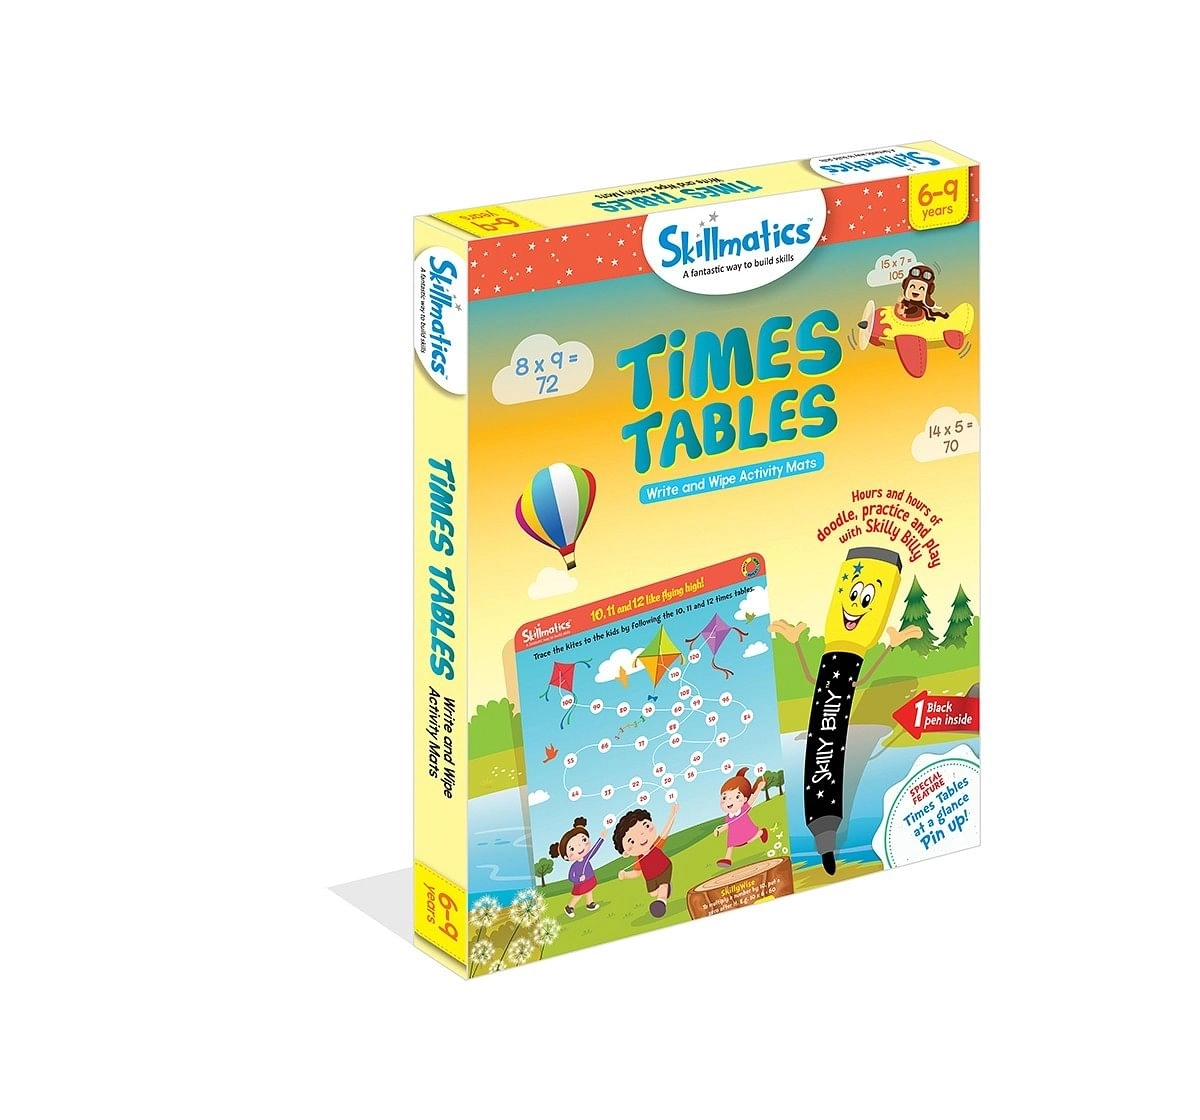 Skillmatics Games for Kids age 6Y+ 